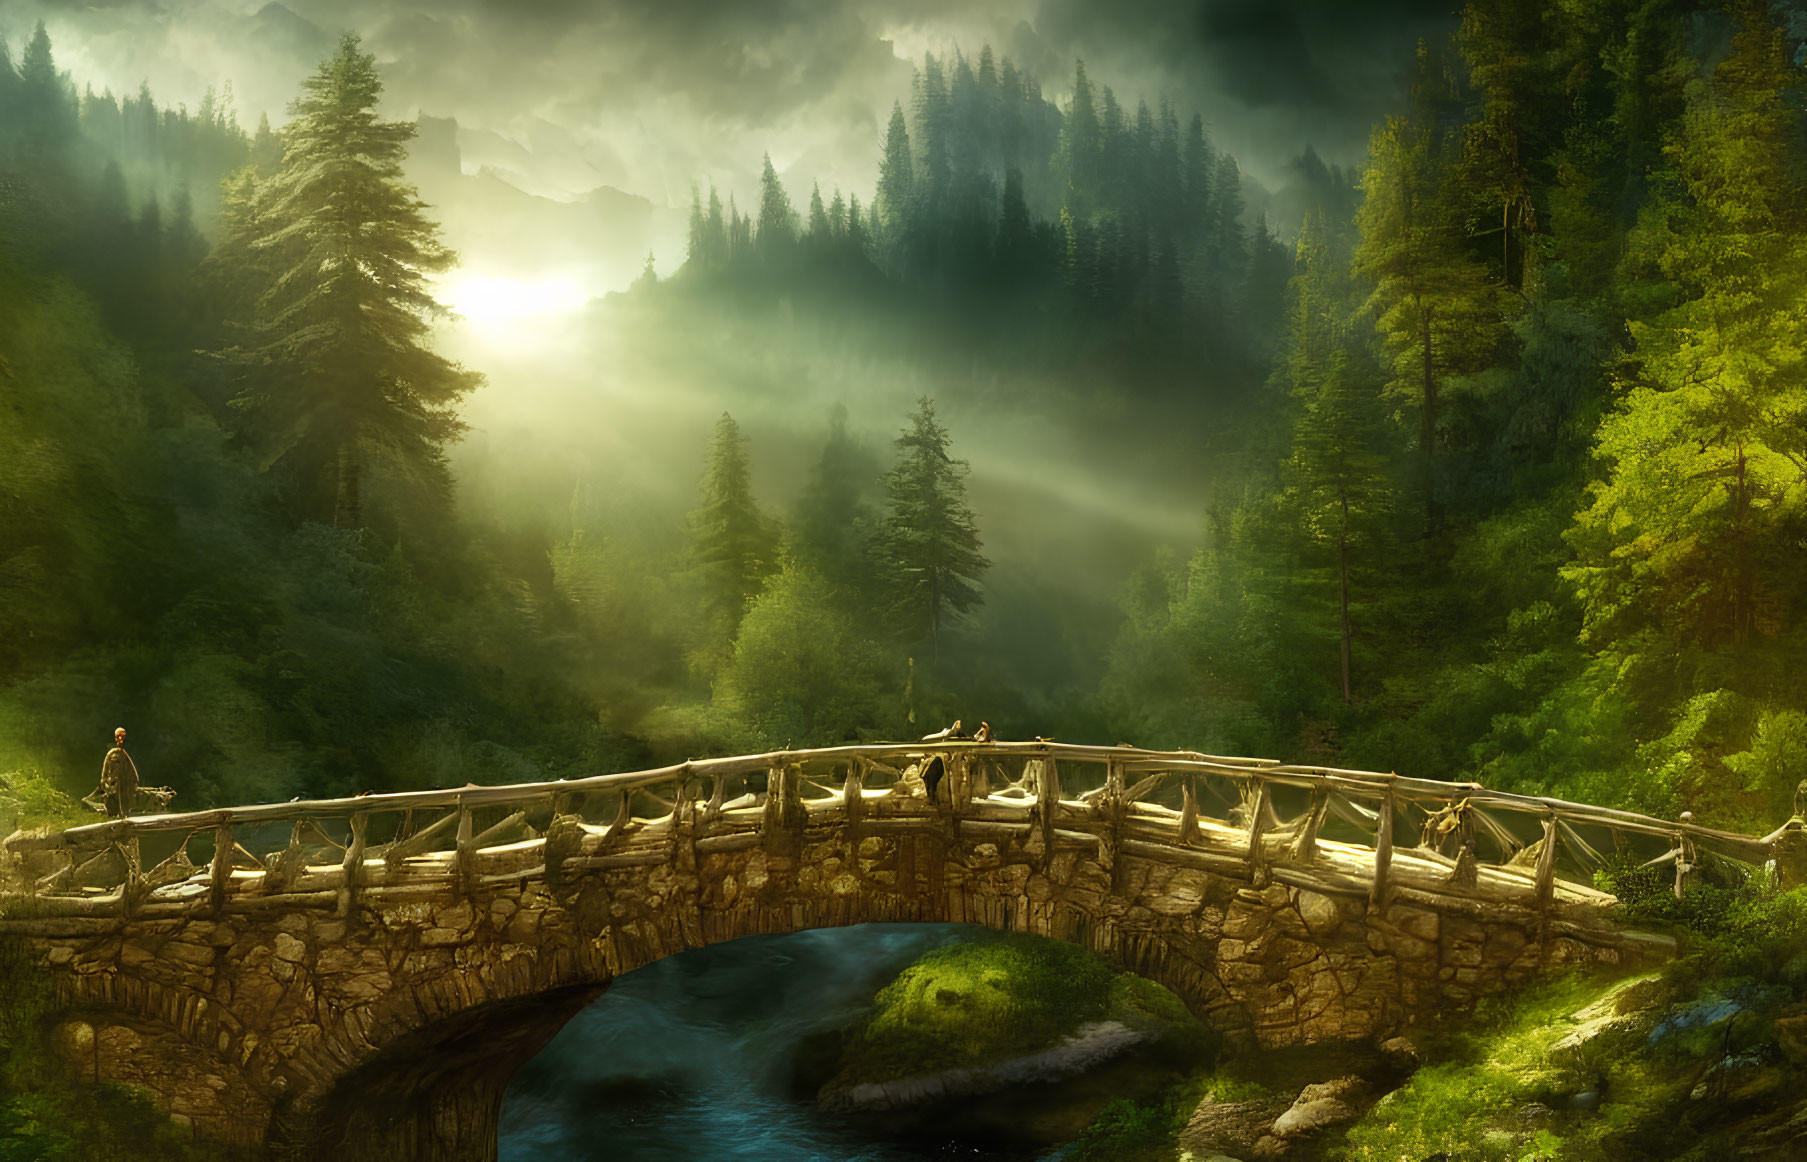 Stone bridge over stream in misty forest with golden sunlight